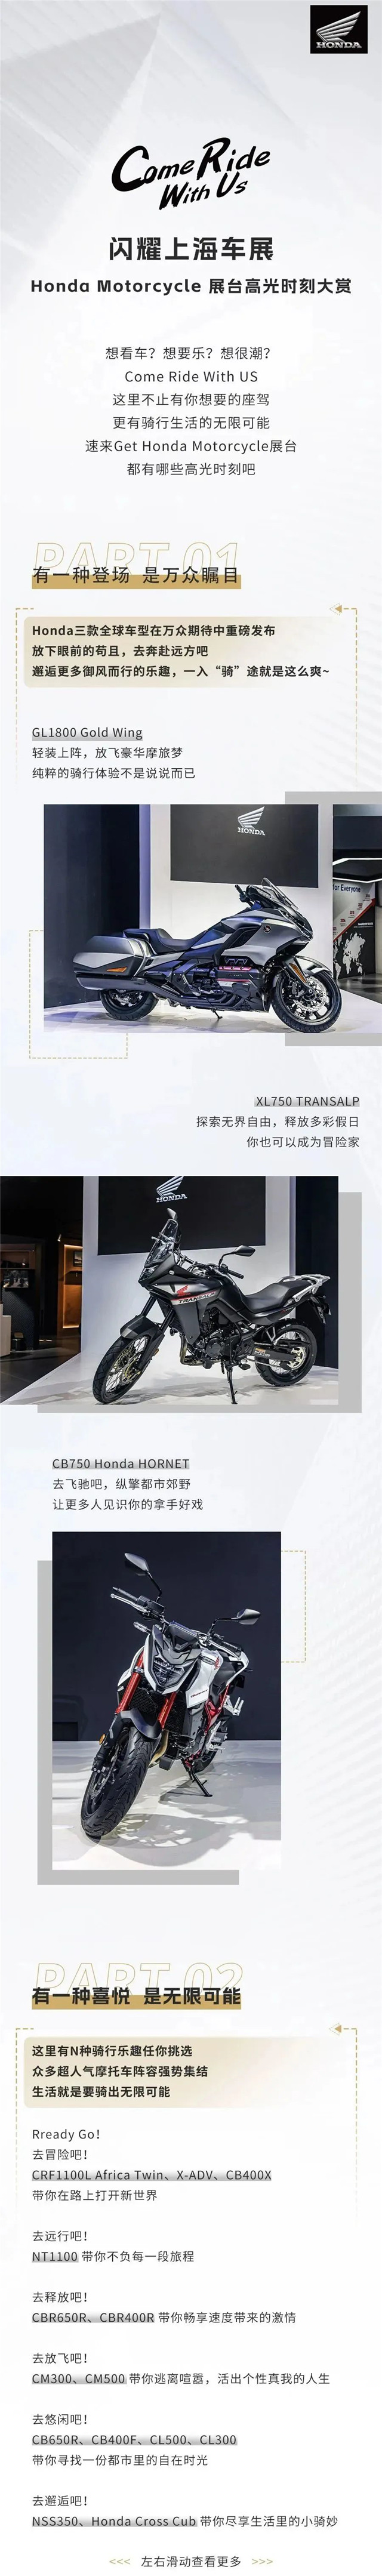 Honda Motorcycle上海展高光時刻大賞